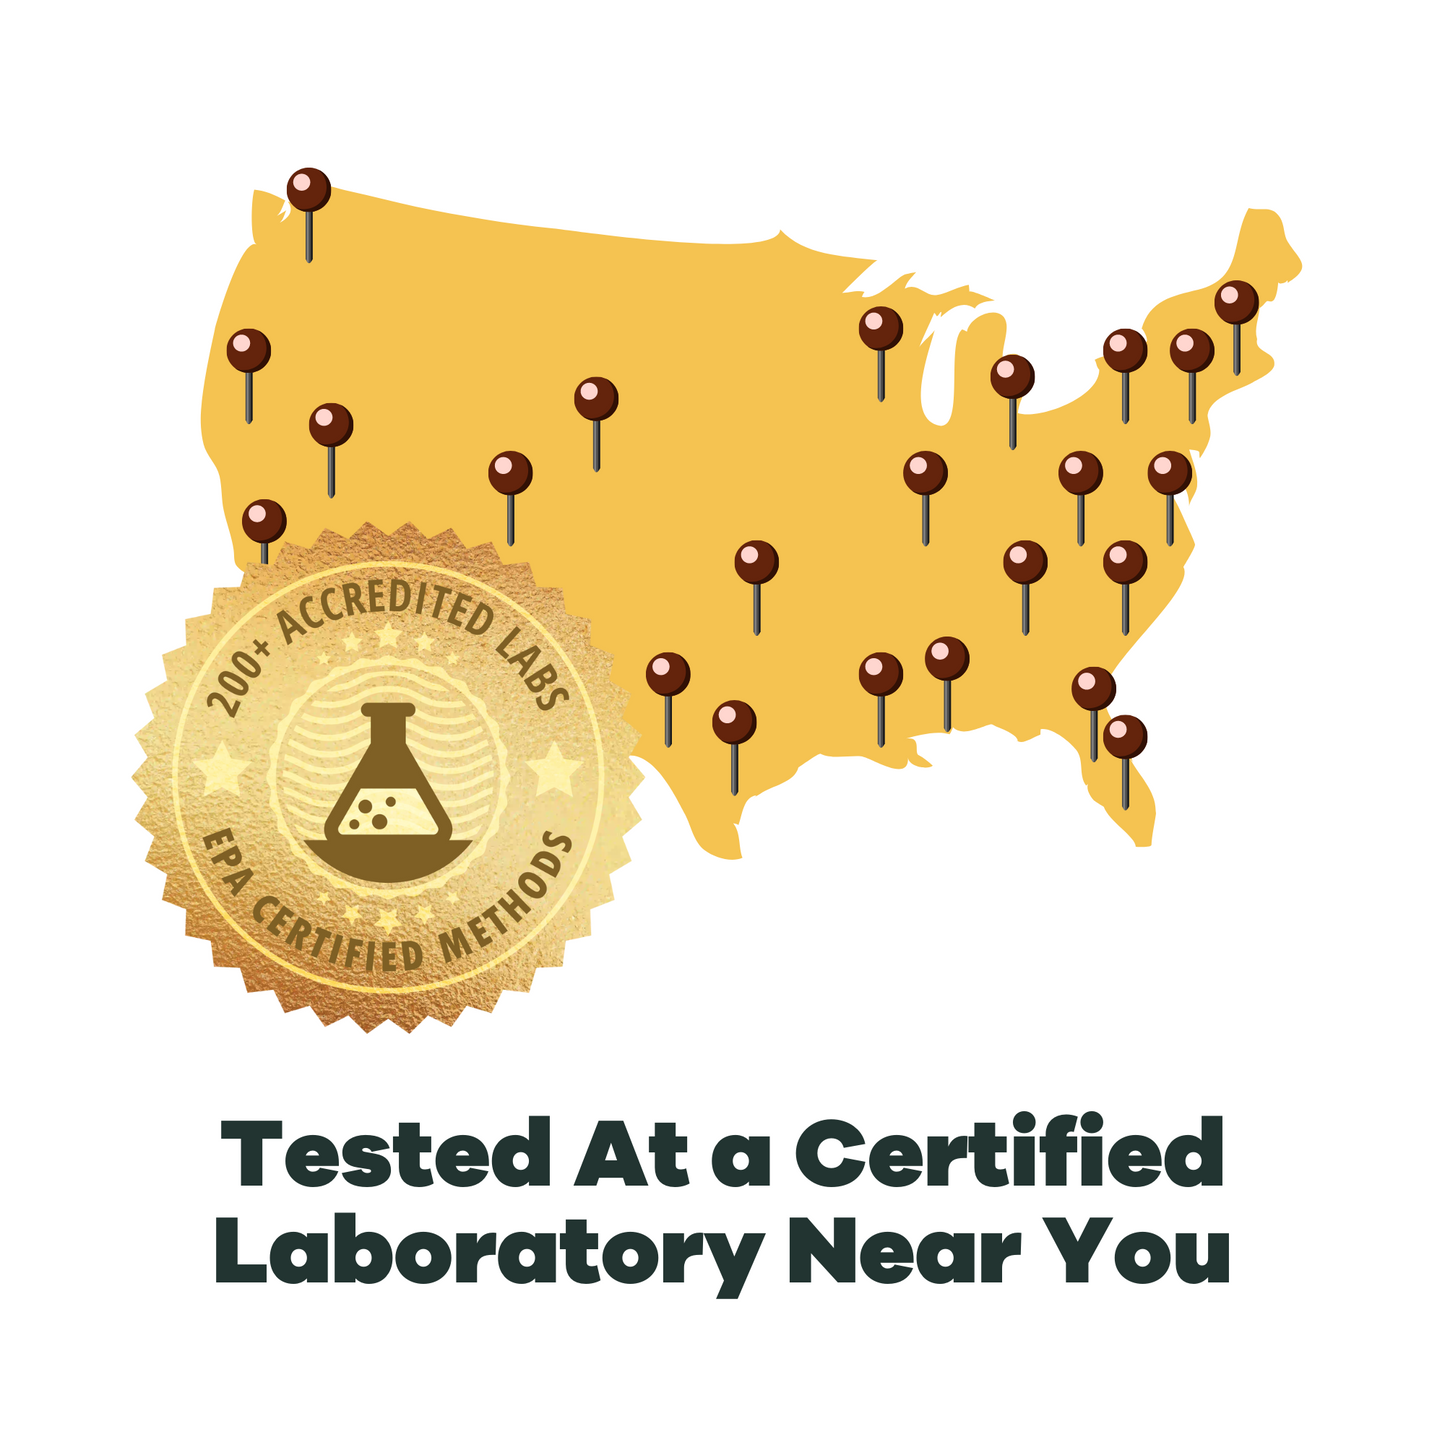 Certified Laboratory Testing Near You